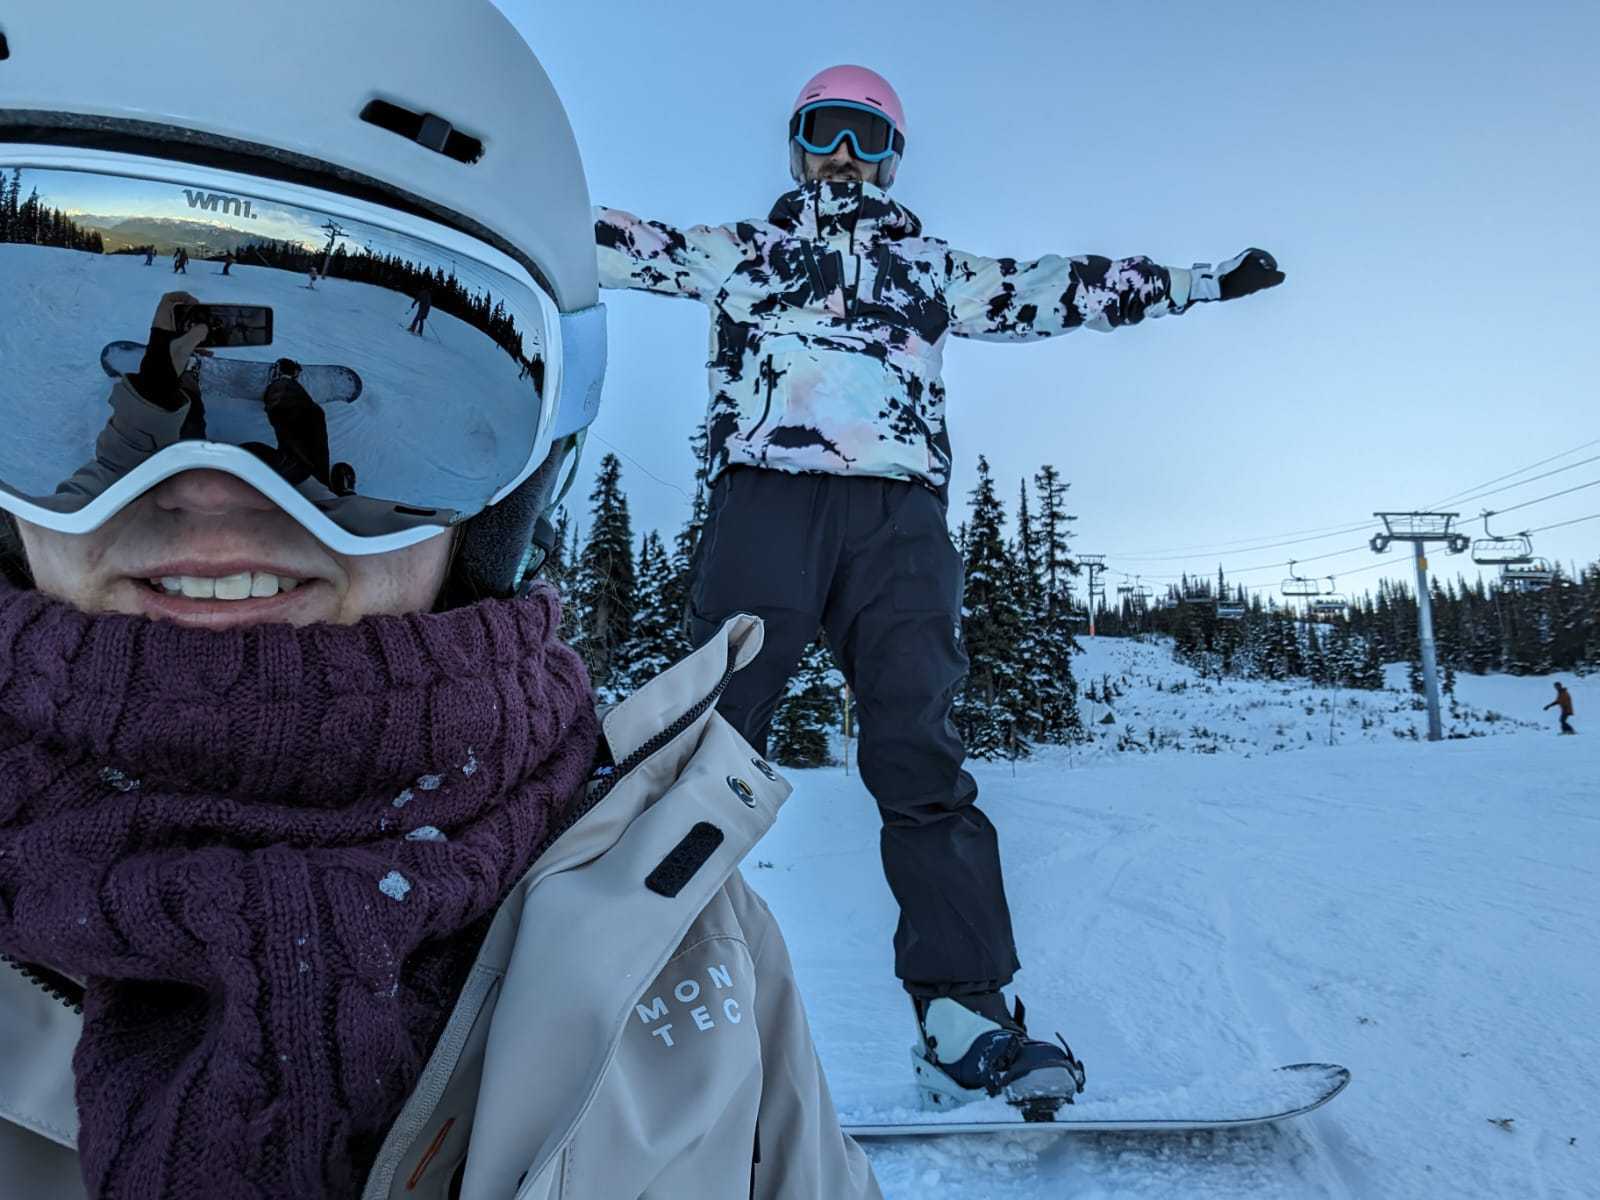 Aoife and Ben snowboarding